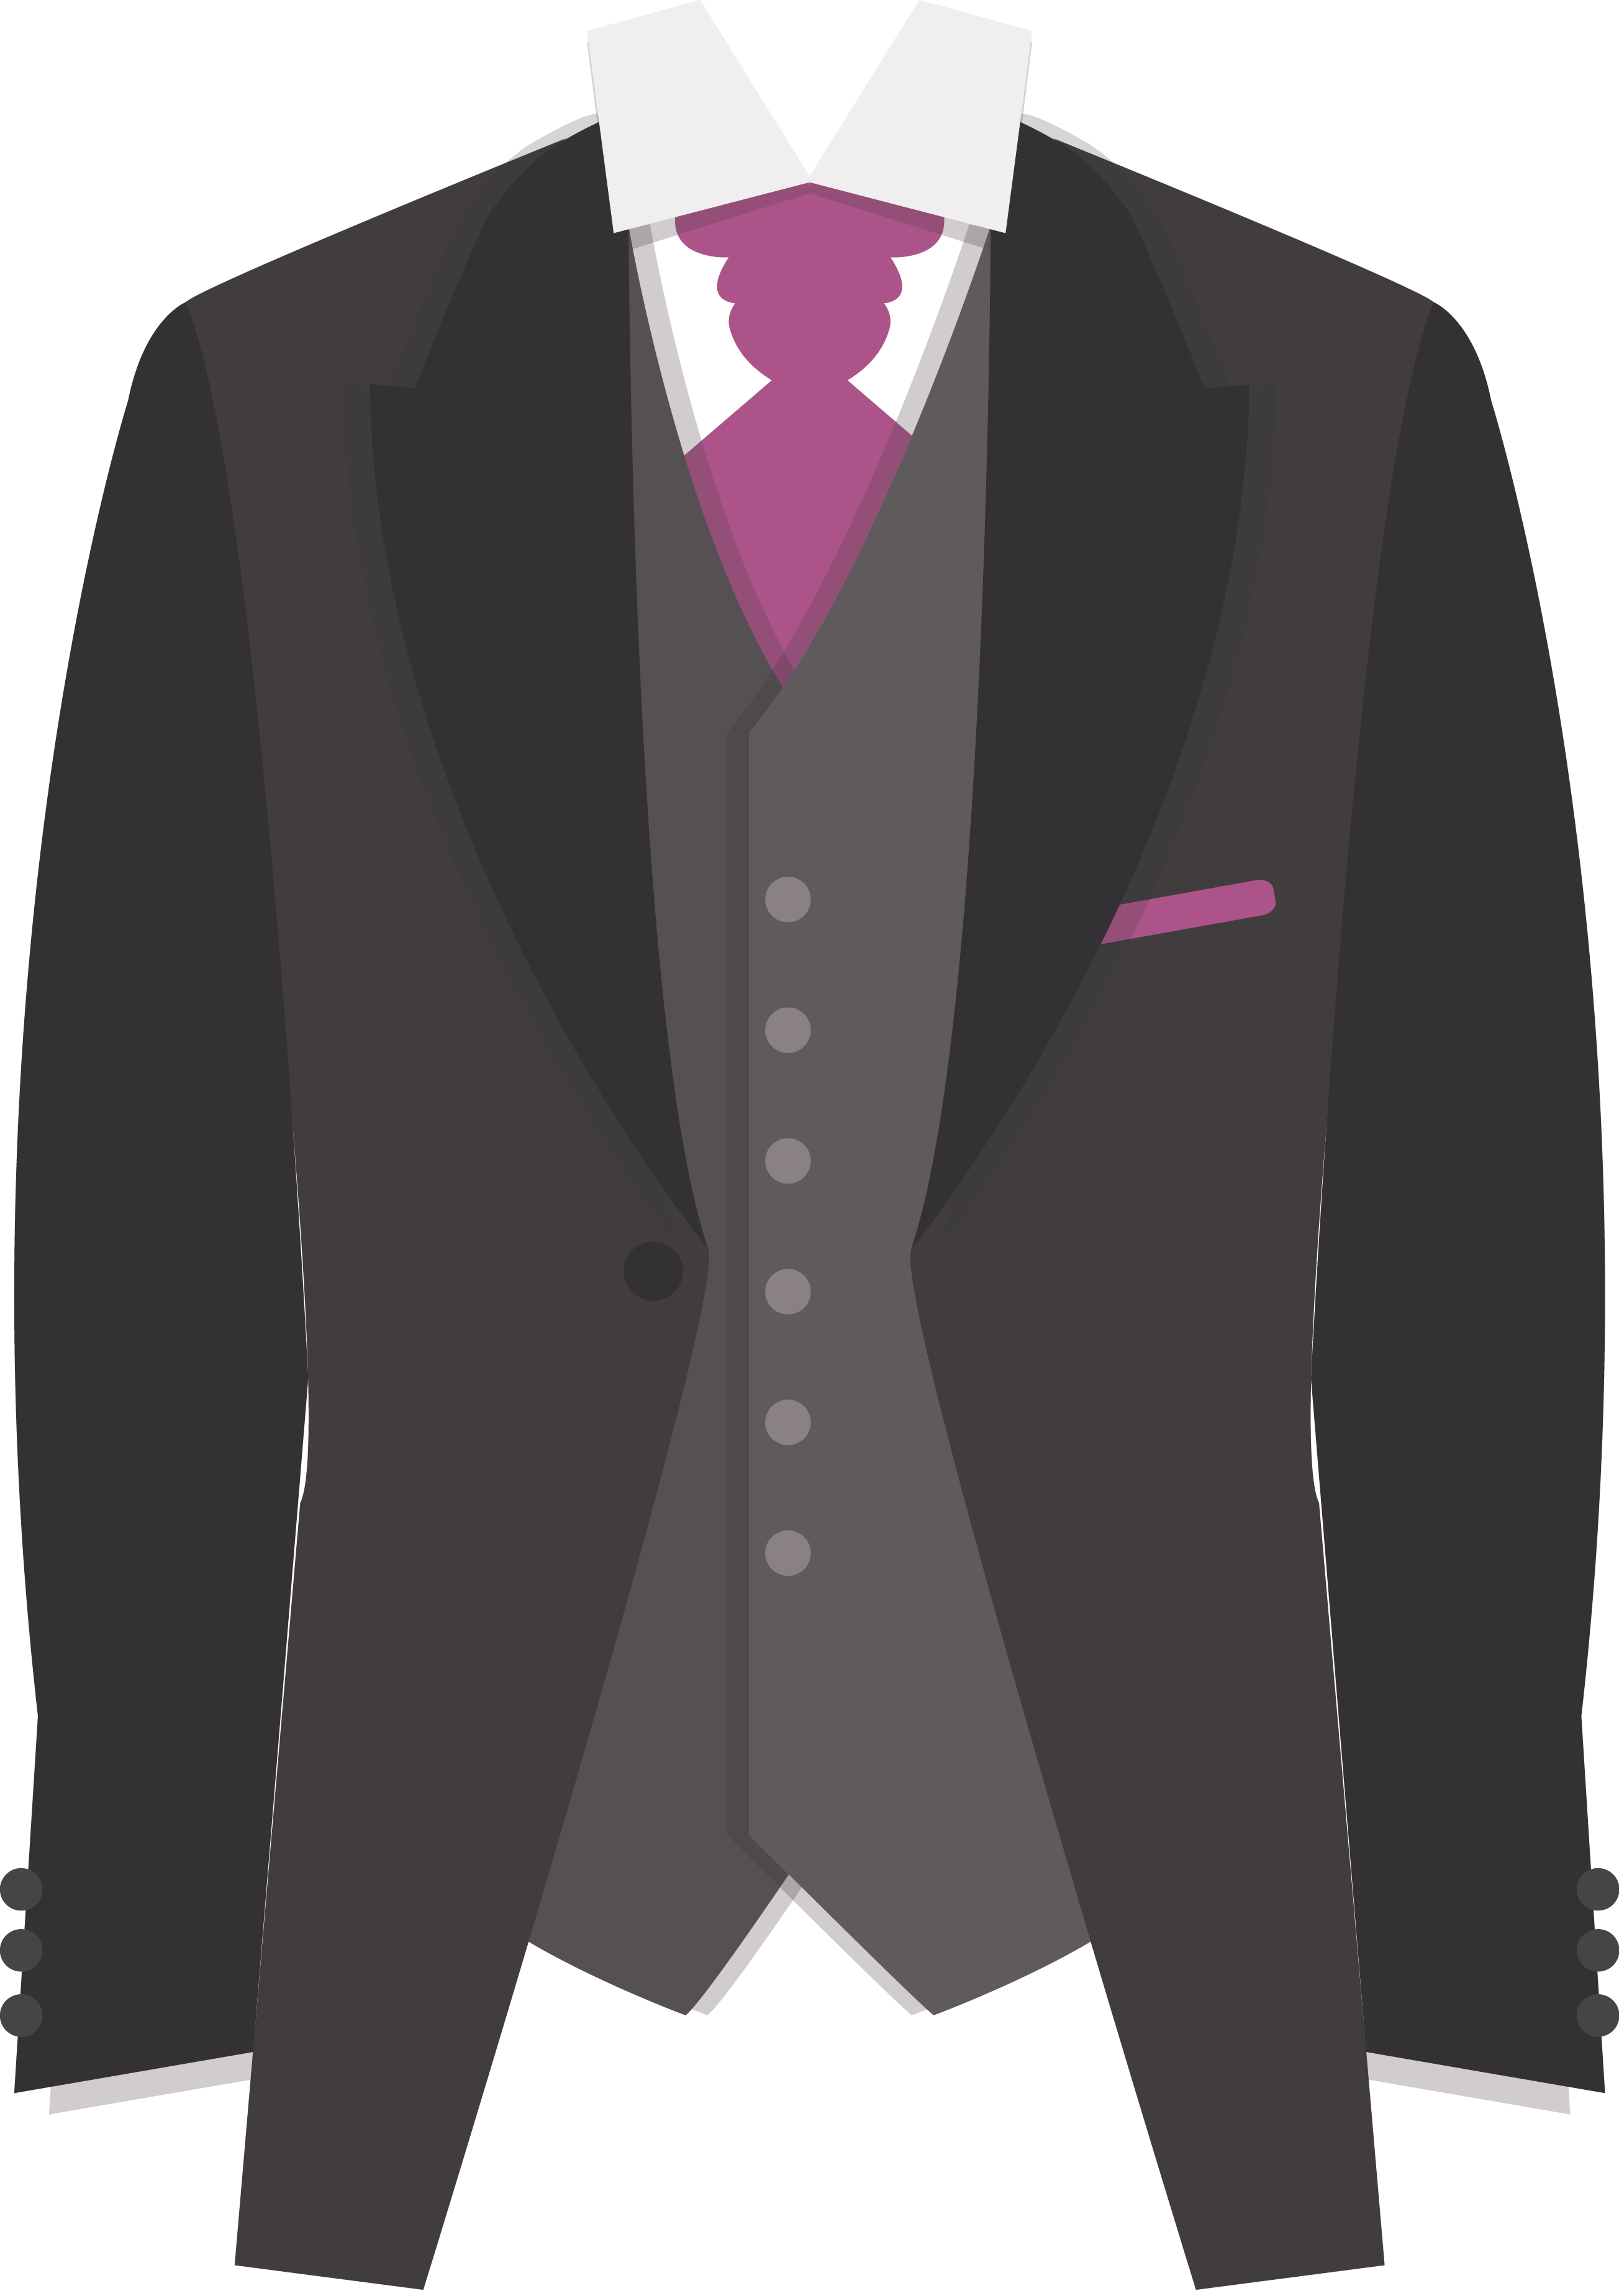 Suit Formal wear - Vector suit png download - 2607*3698 - Free ...